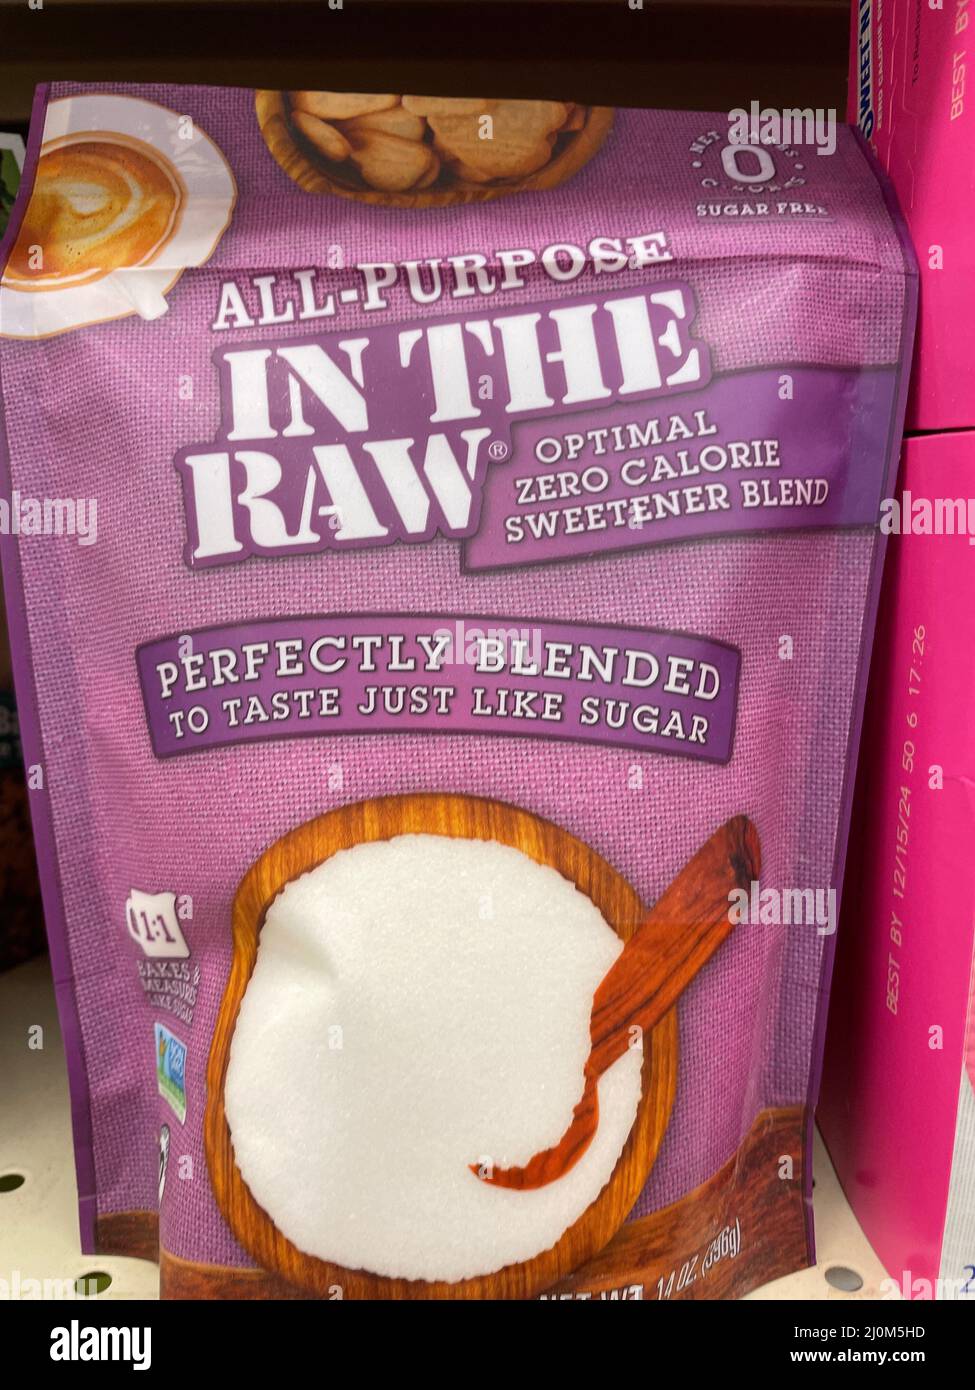 Grovetown, Ga USA - 03 13 22: Artificial sweeteners on retail store shelf Pink bag Sugar in the raw Stock Photo